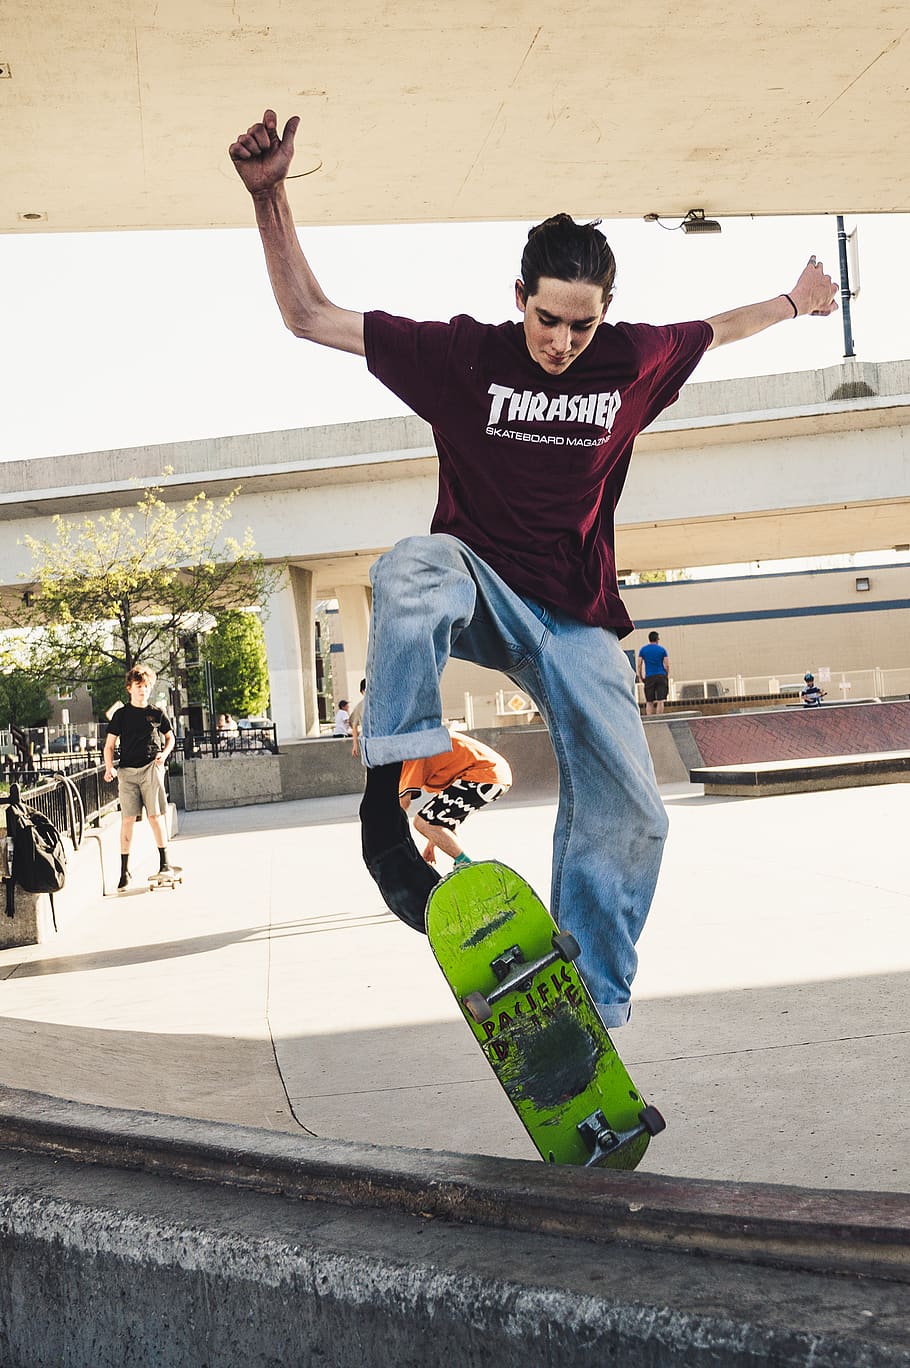 Photo Of Man Playing Skateboard, balance, fun, skate park, skater